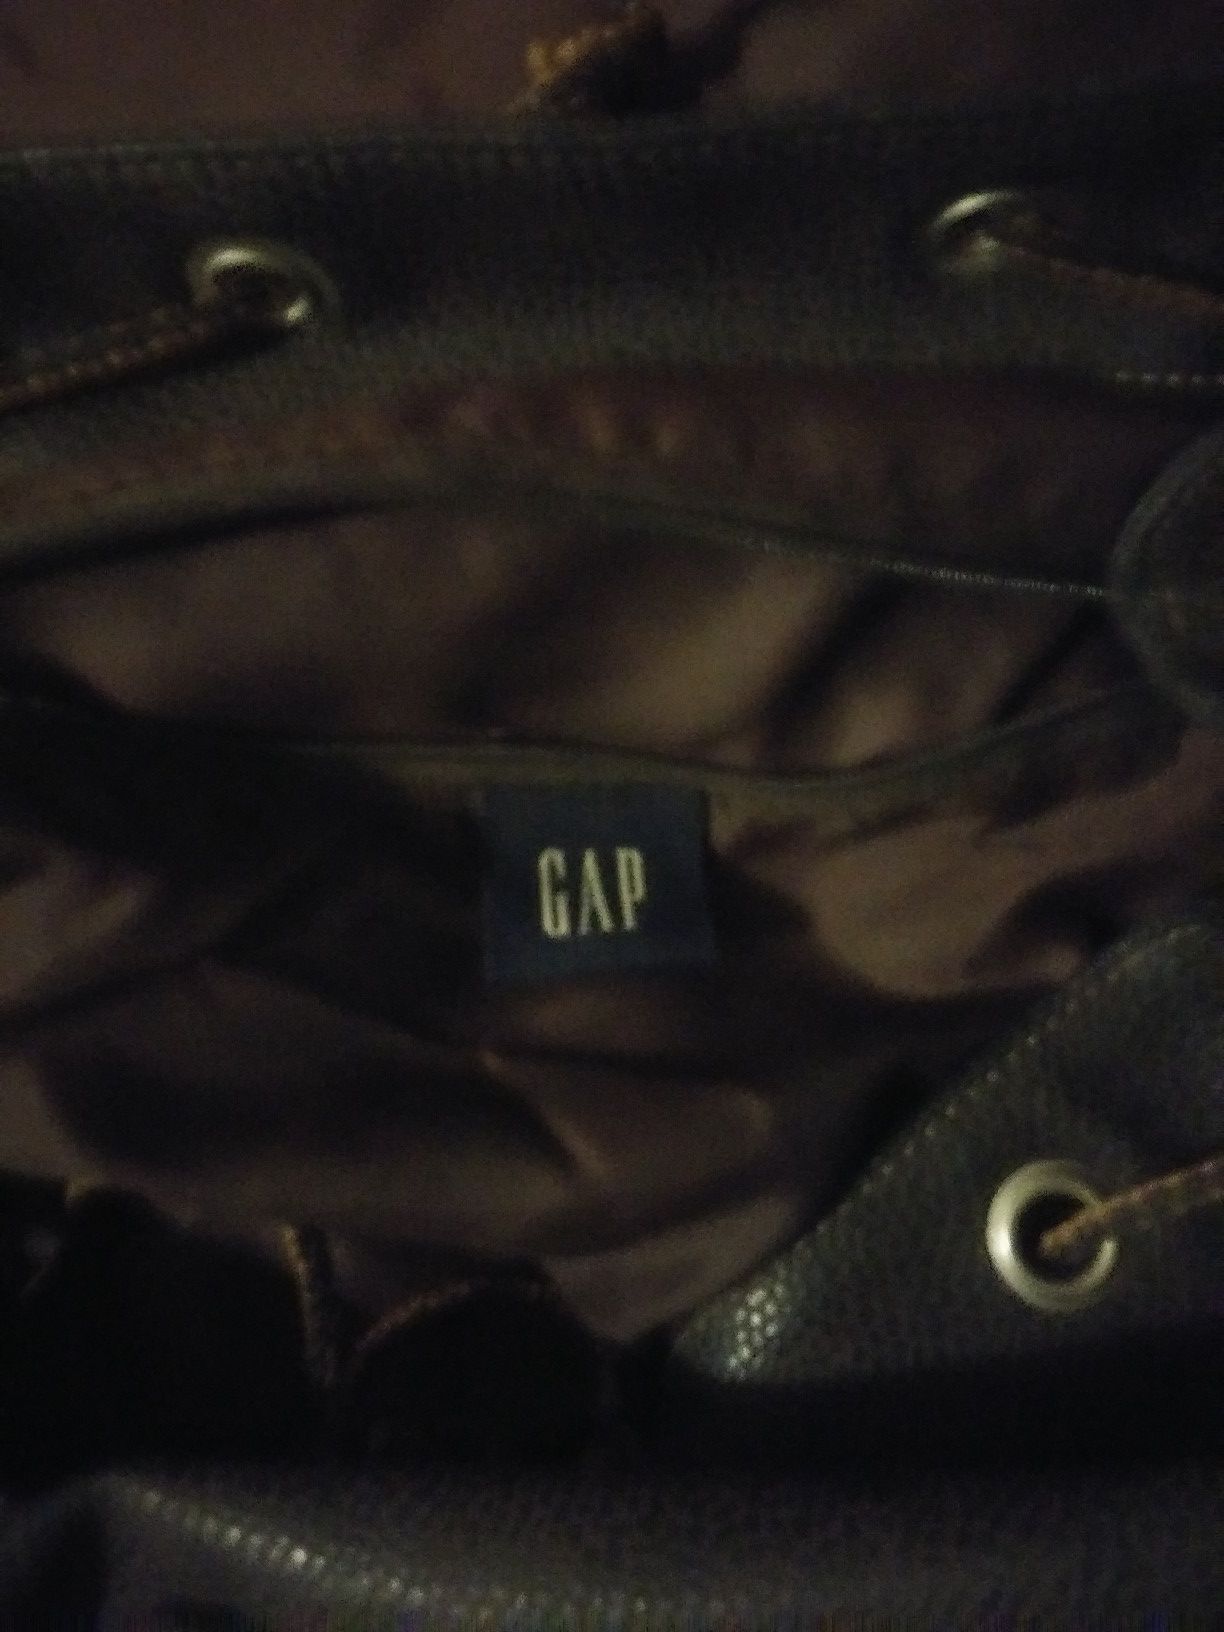 Gap backpack